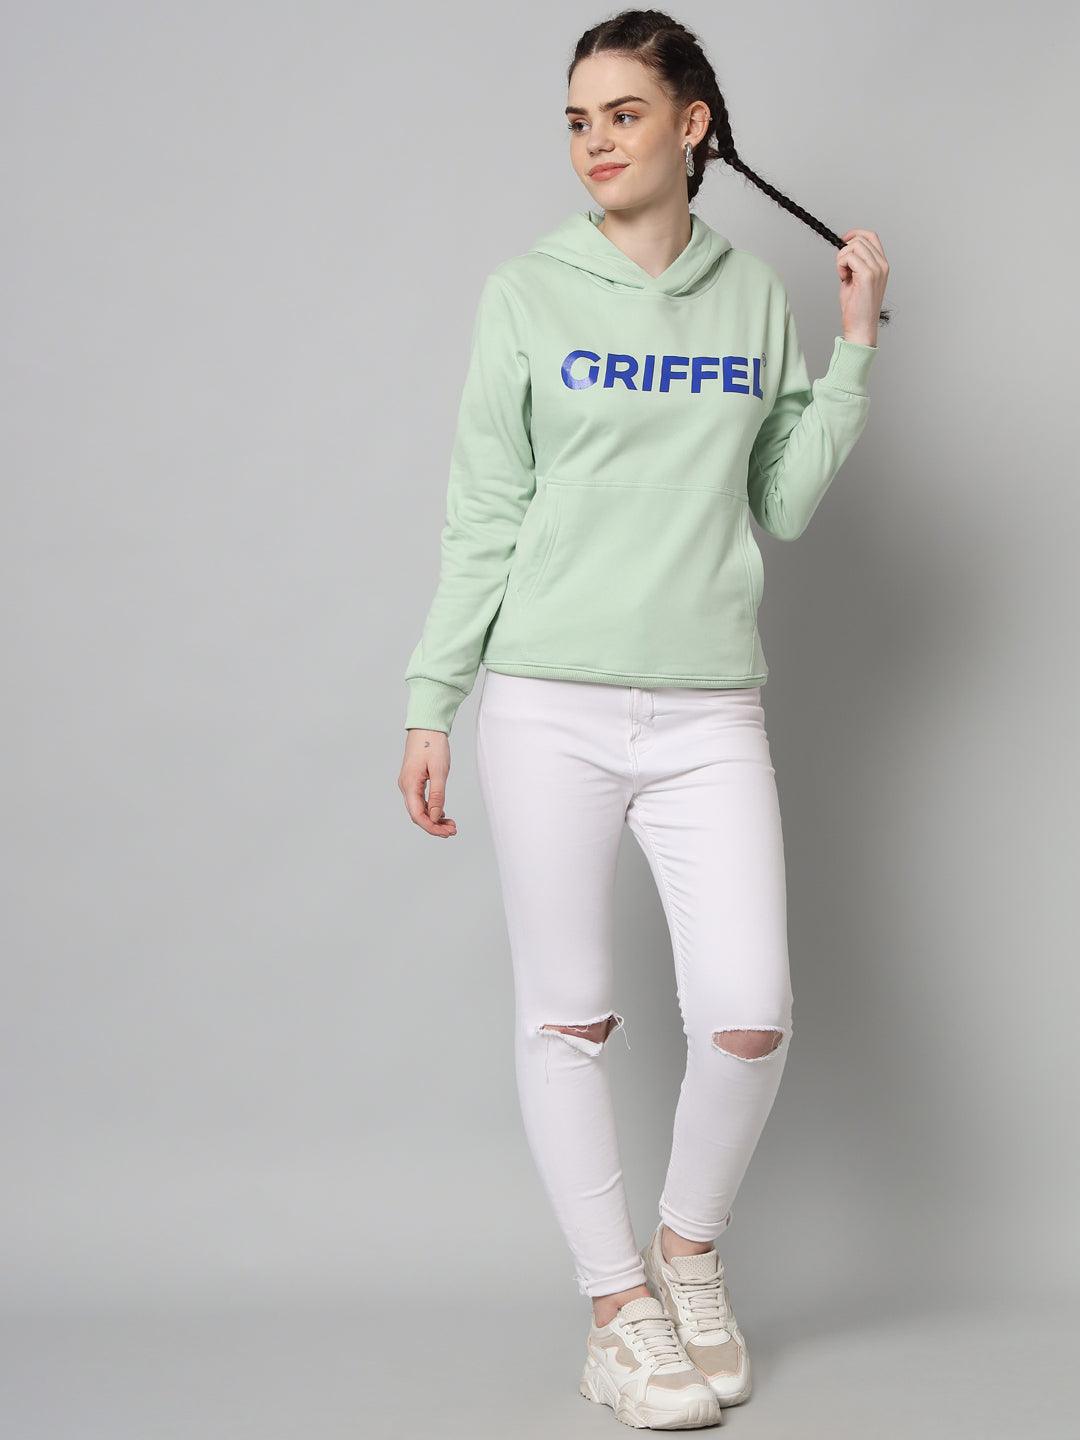 Griffel Women’s Cotton Fleece Full Sleeve Hoodie Sea Green Printed Sweatshirt - griffel